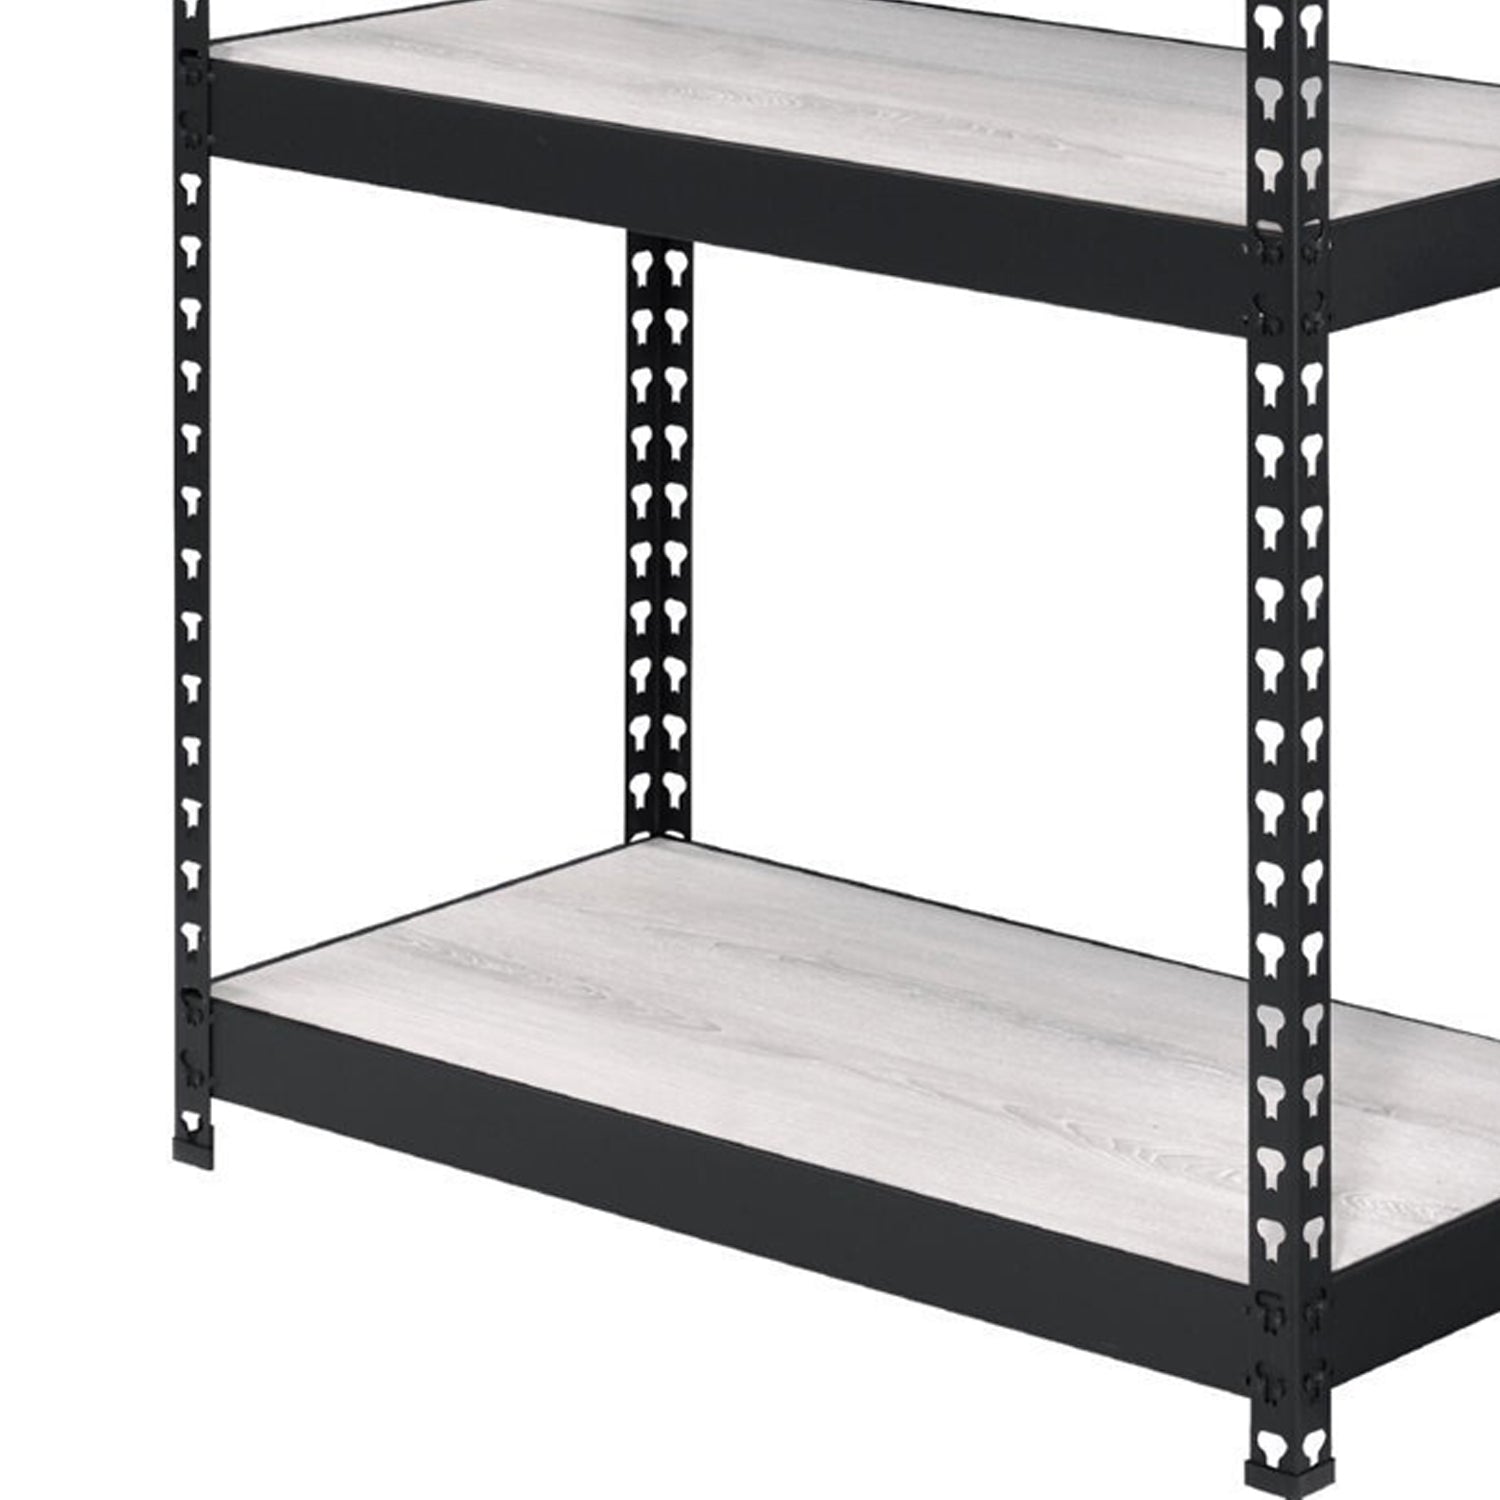 4 Tier Bookshelf with Mdf Adjustable Shelves,